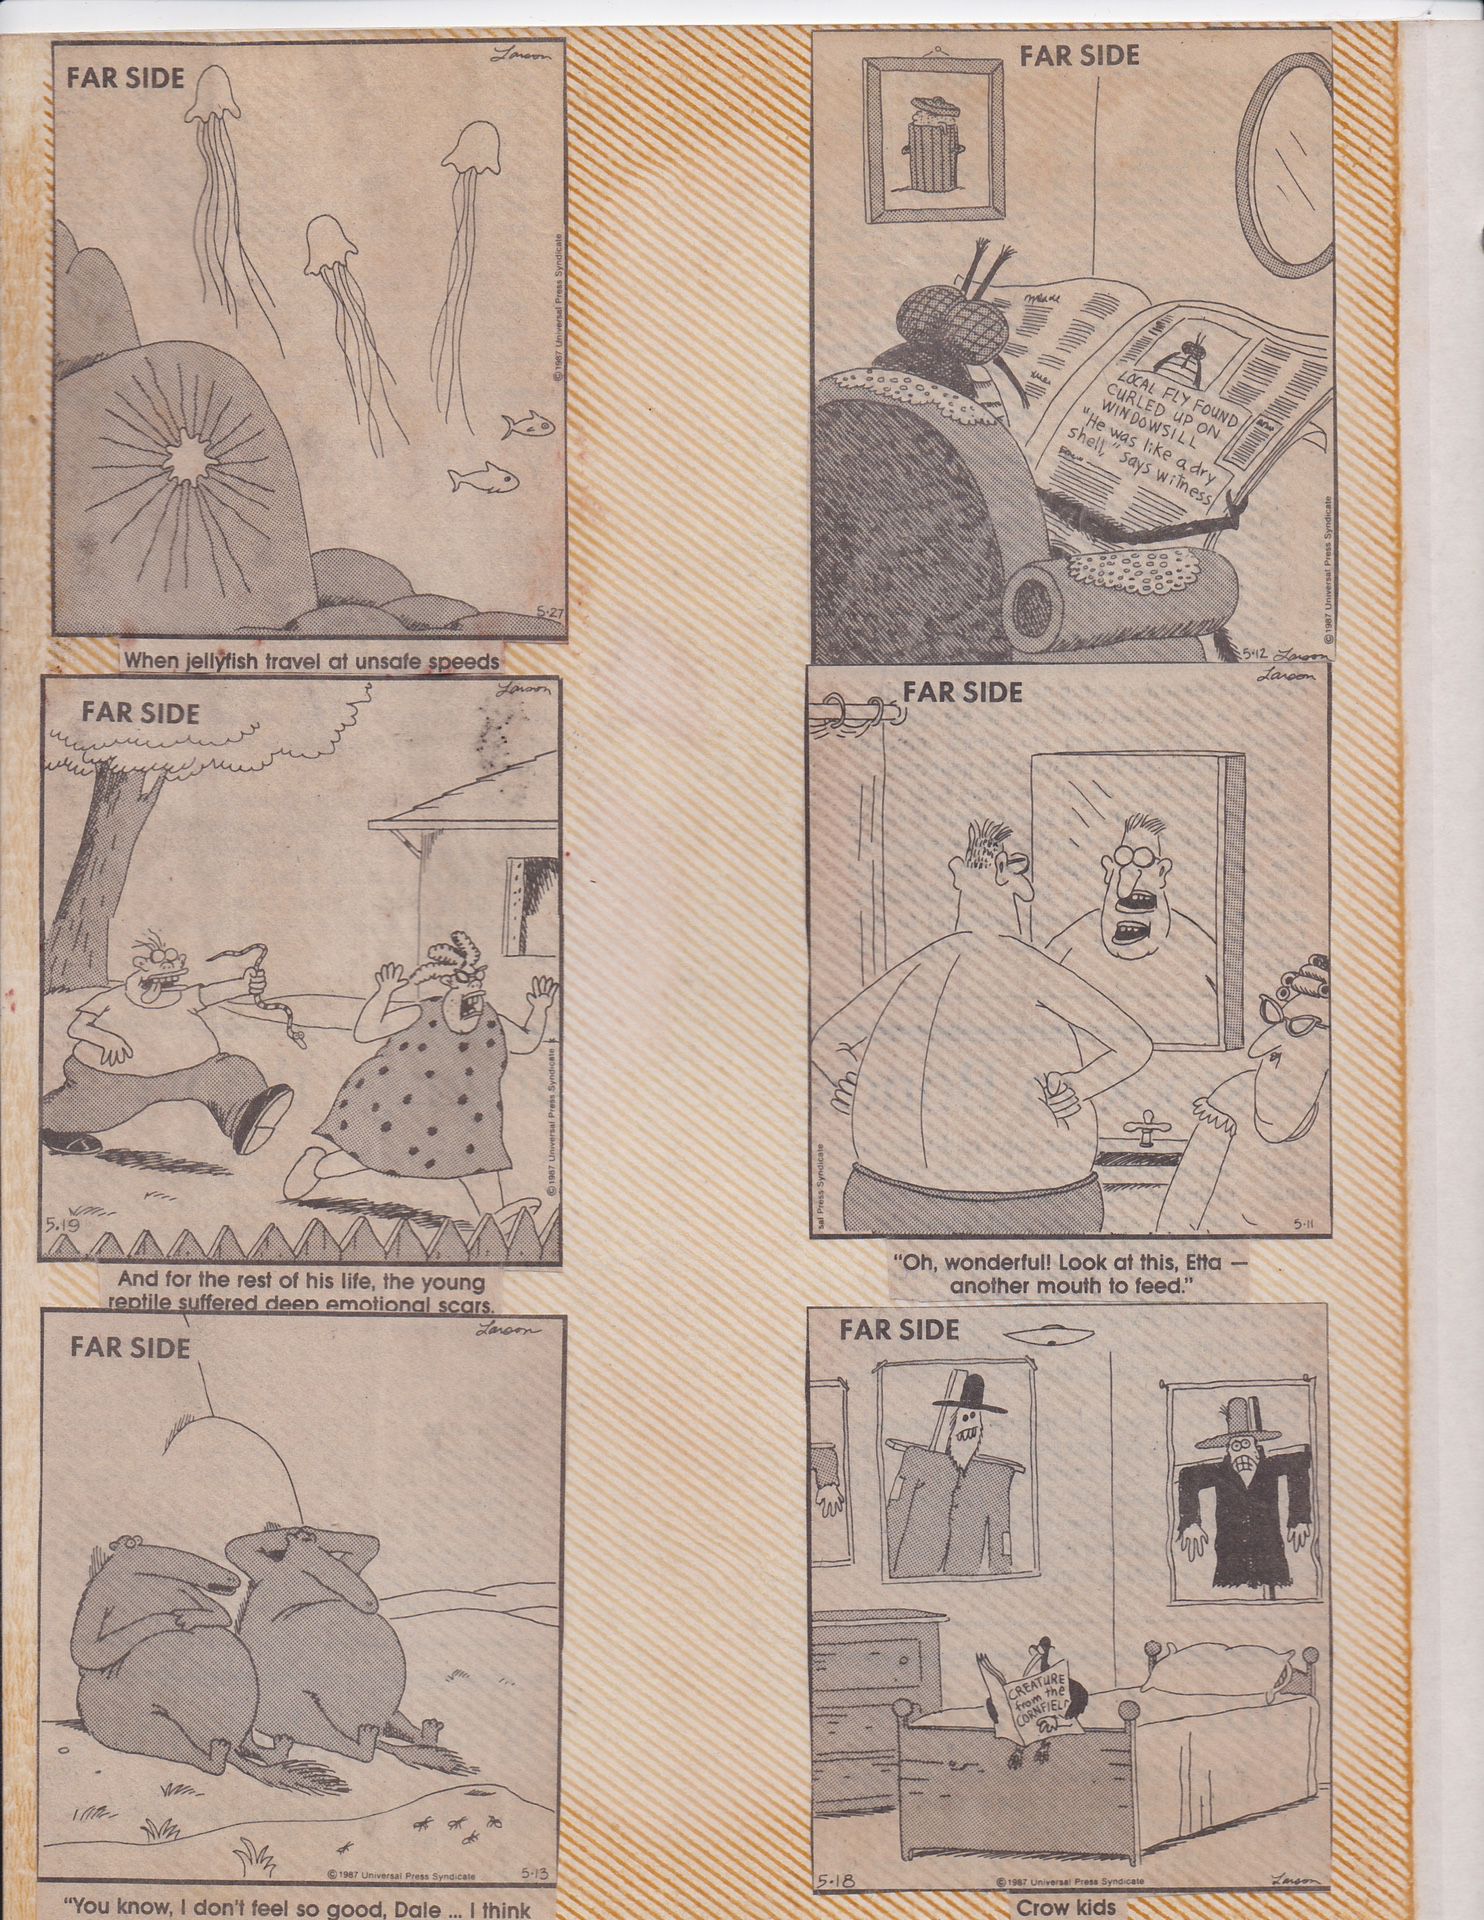 1987 Far Side Newspaper Clipping Comics Original Vintage